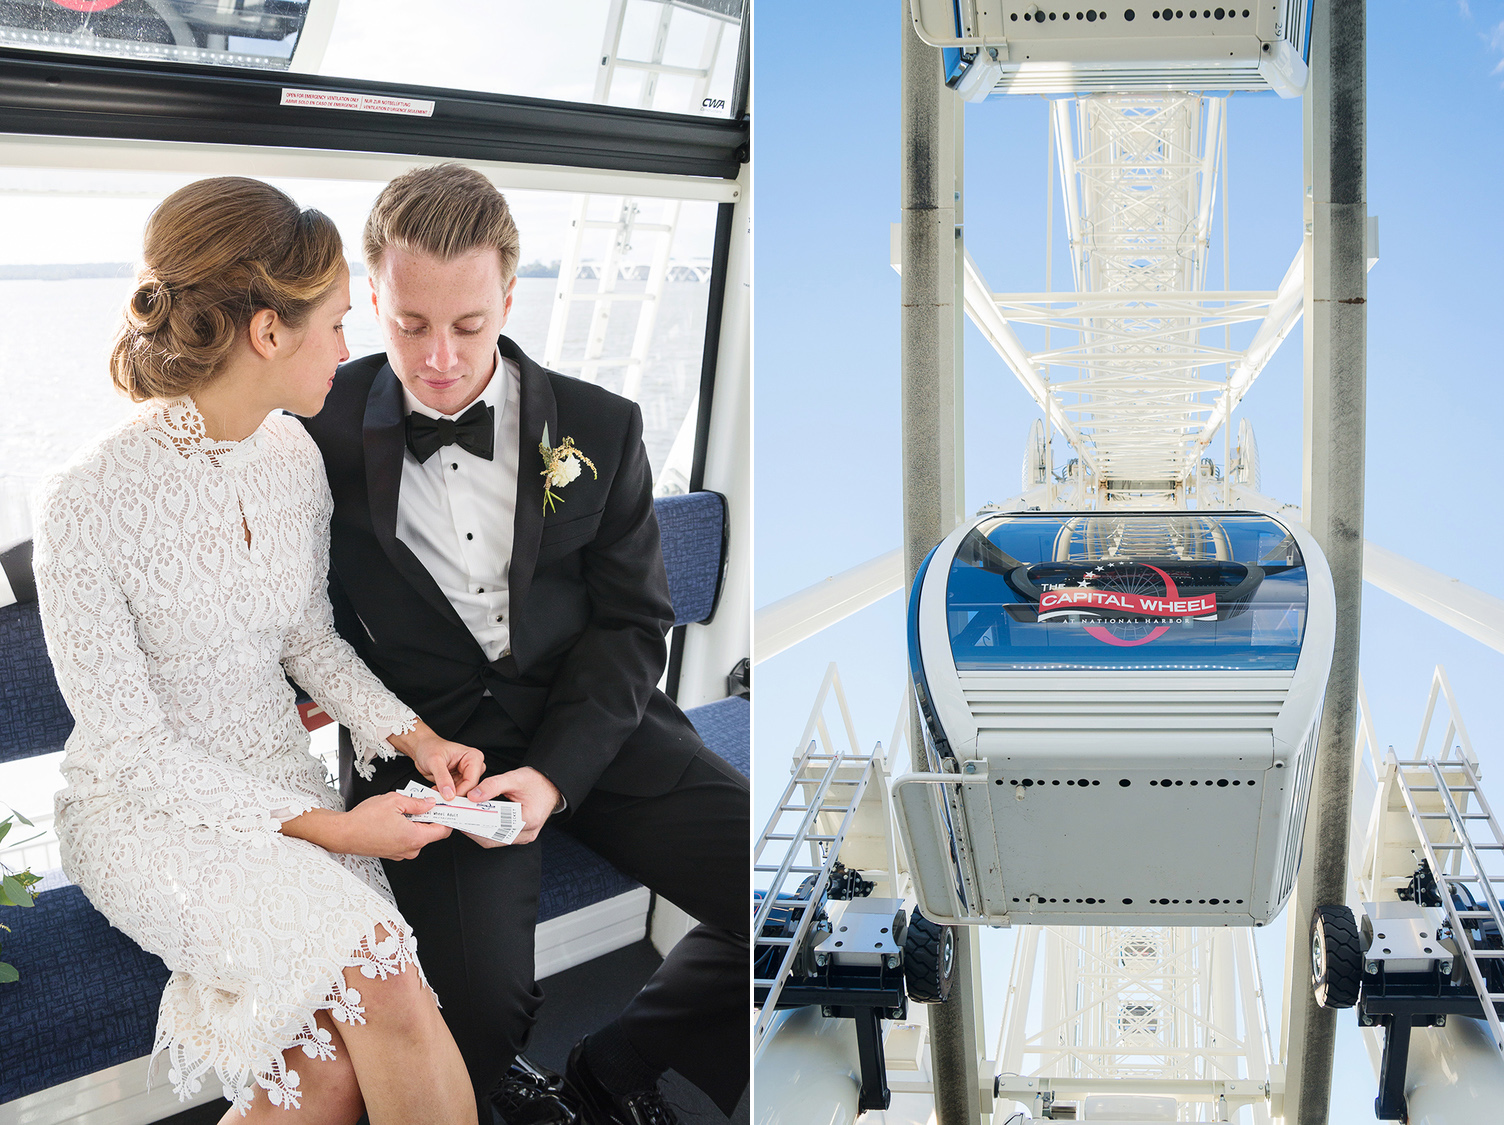 National harbor bride and groom photos in ferris wheel